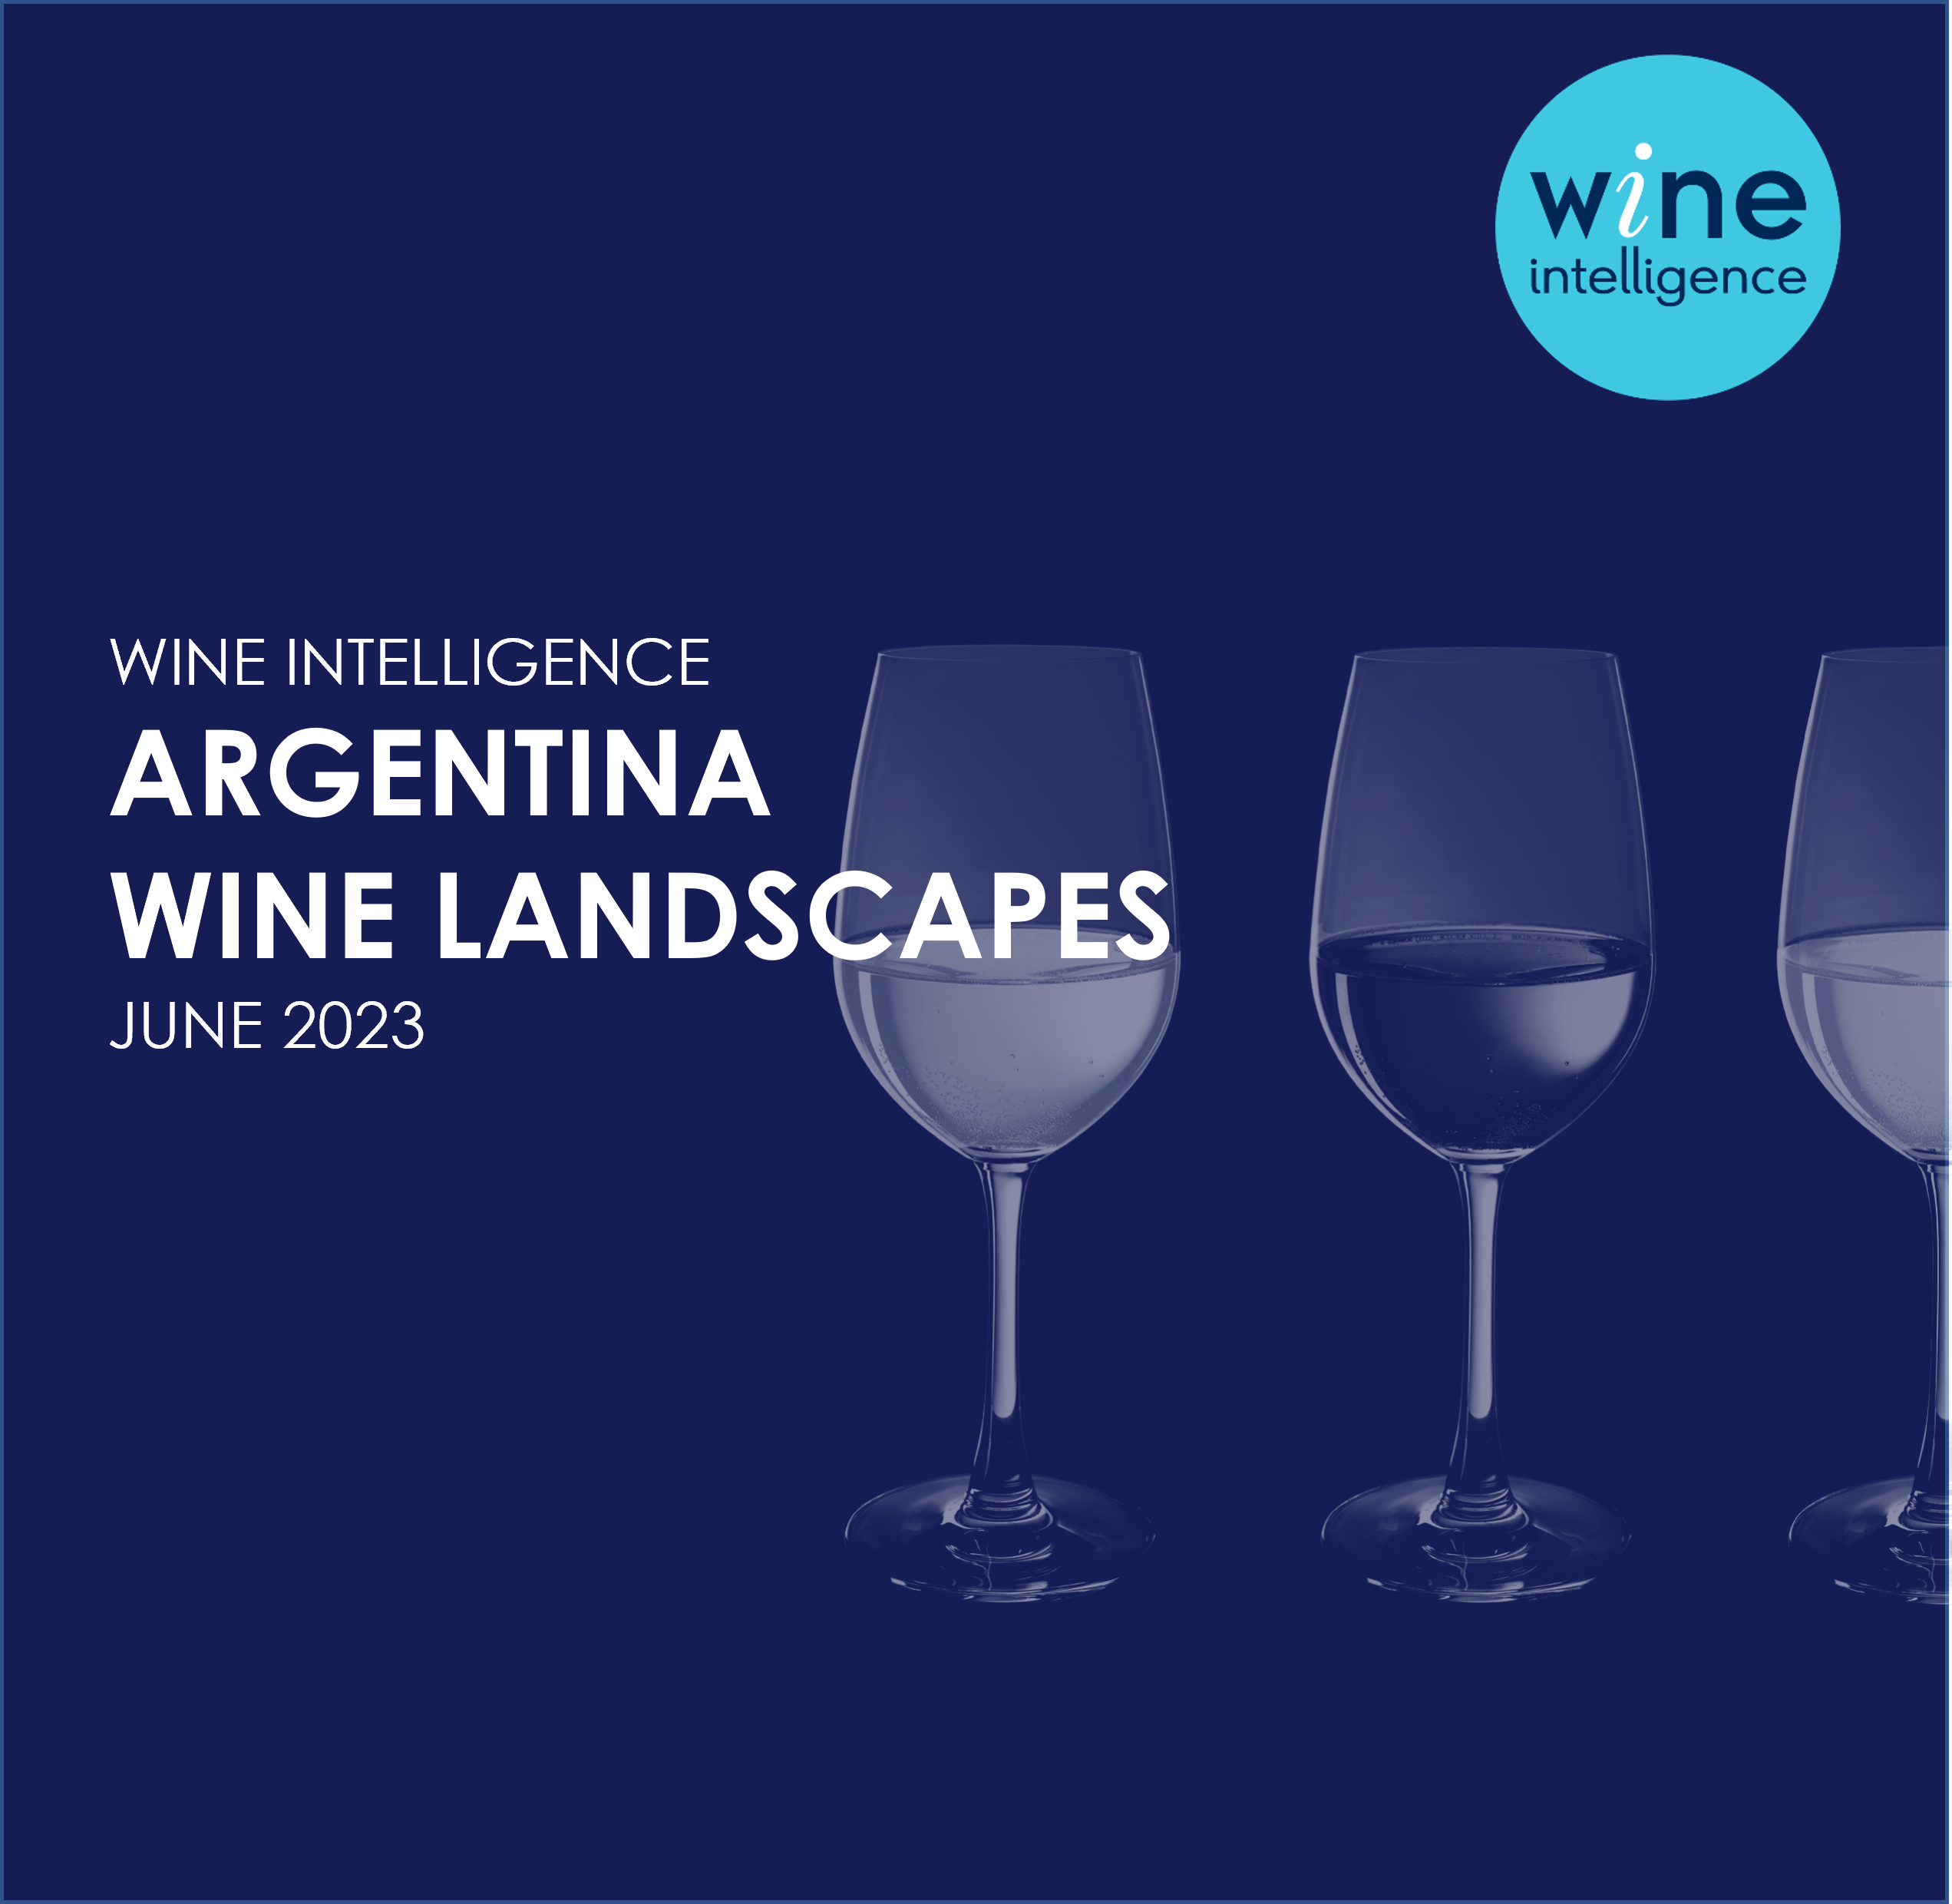 Argentina Wine Landscapes thumbnail 2023 - US Wine Landscapes Report 2023